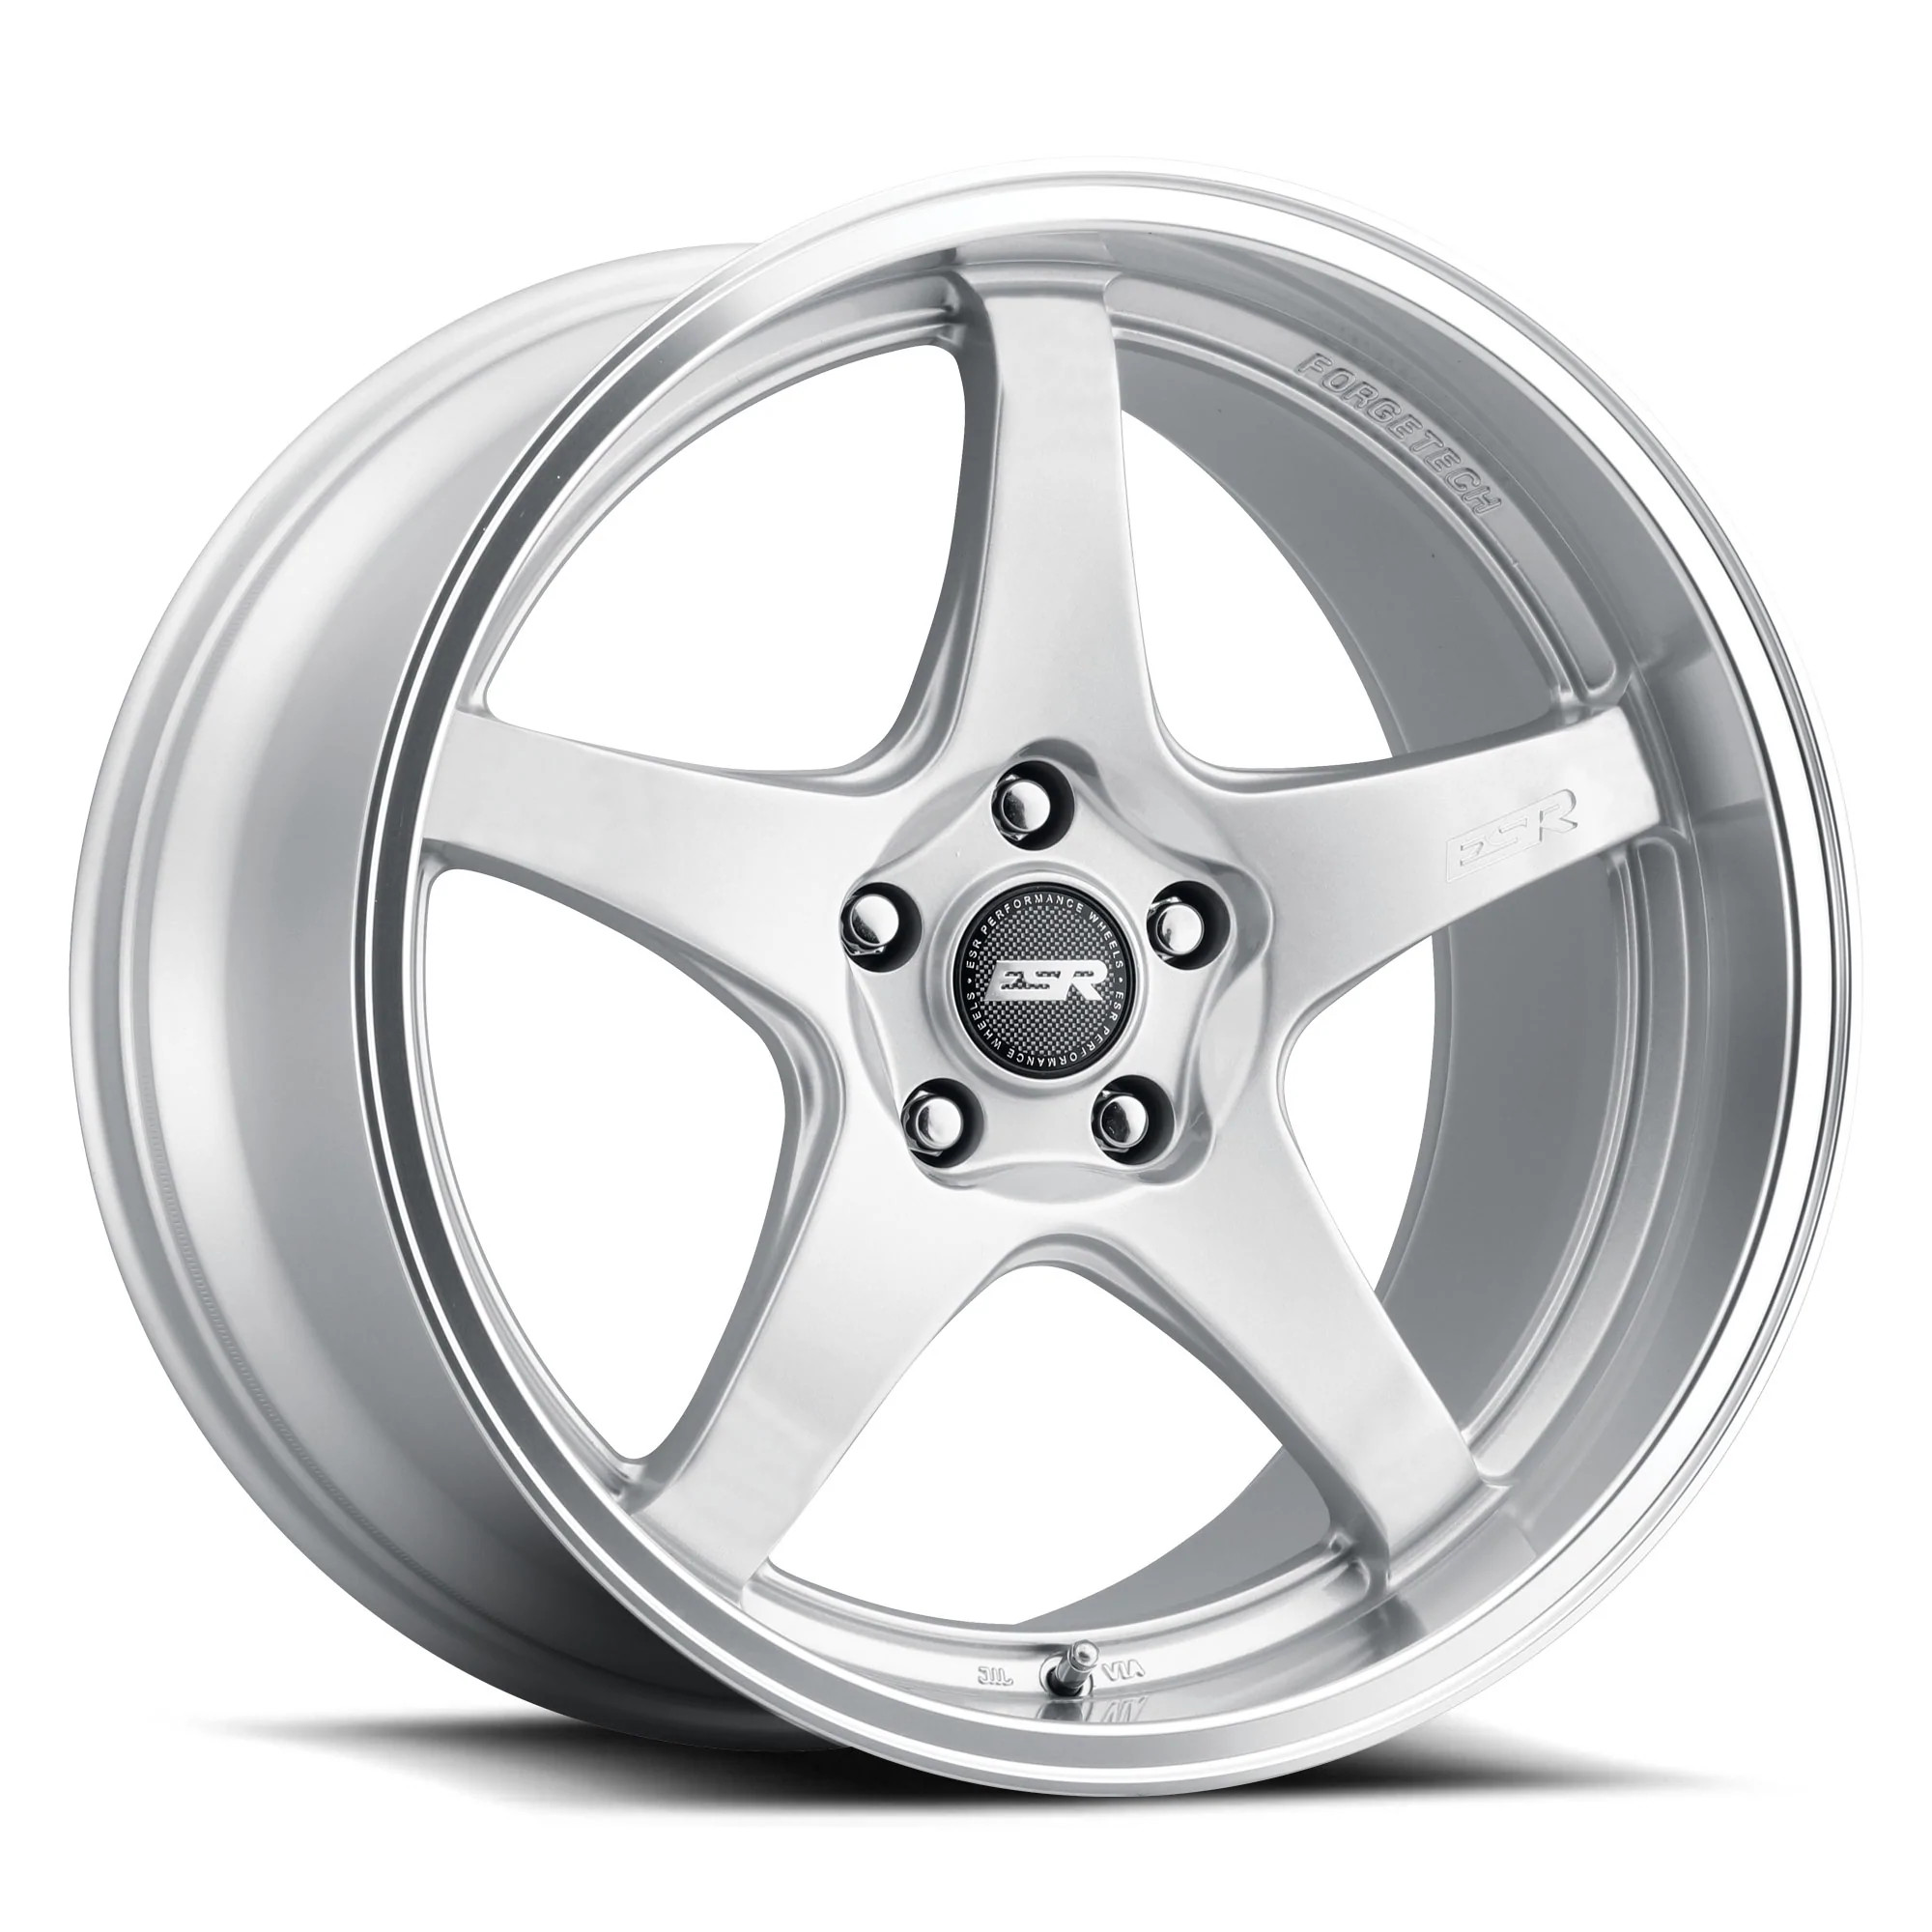 ESR Wheels APEX AP5 18x9.5 / 5x114.3 BP +22 Hyper Silver Machine Lip